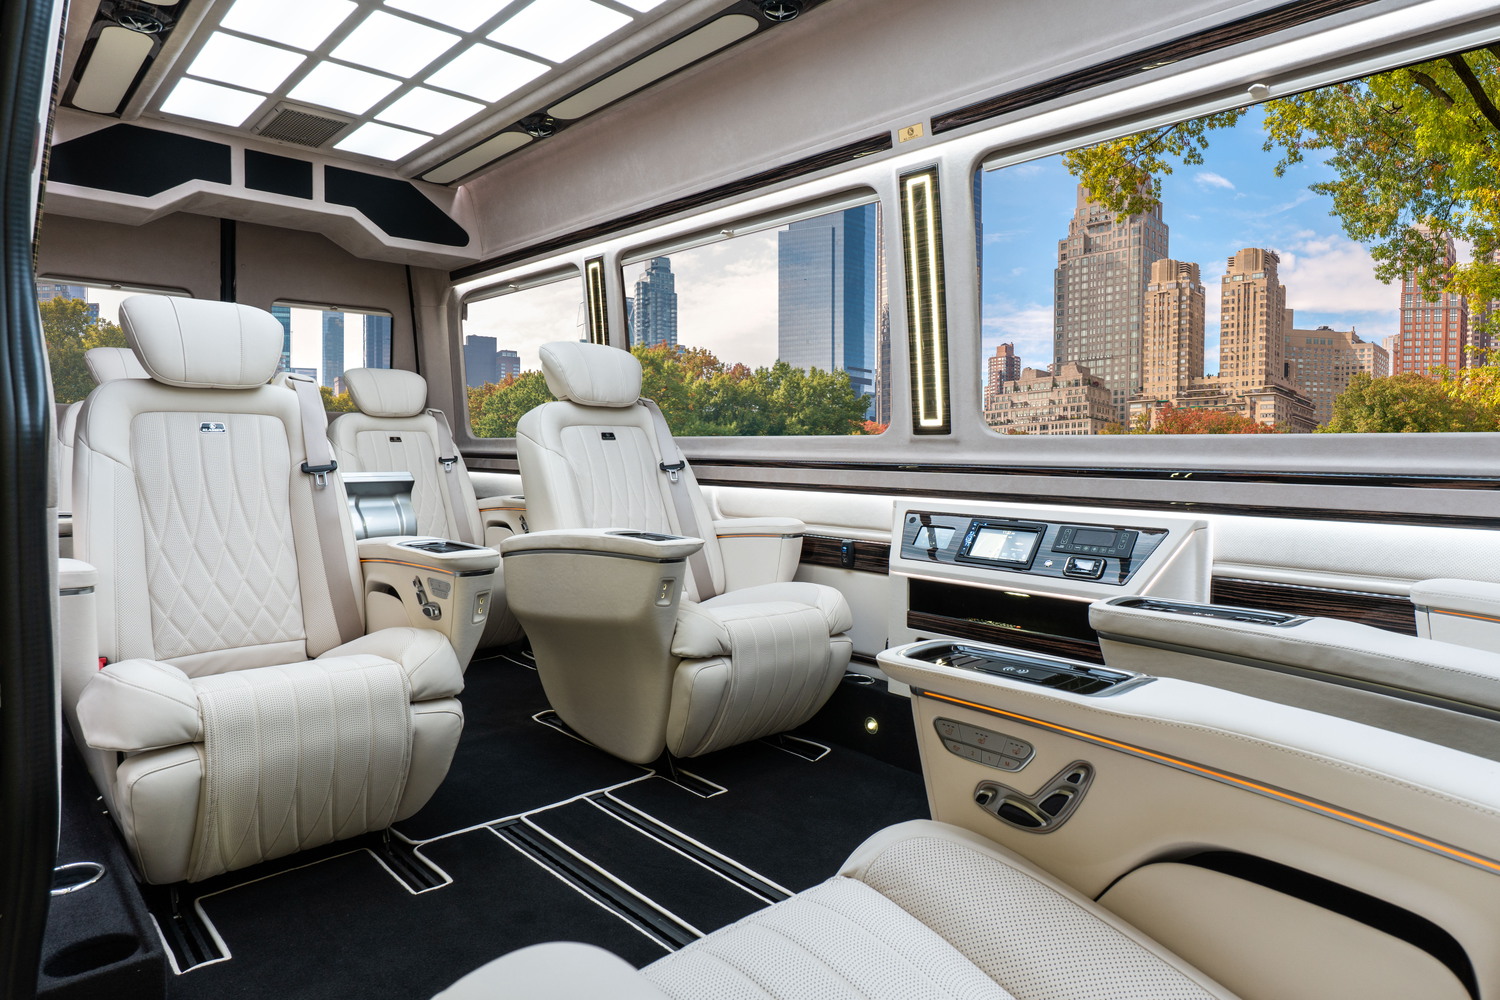 Mercedes Benz Sprinter Luxury VIP First Class Edition Conversion